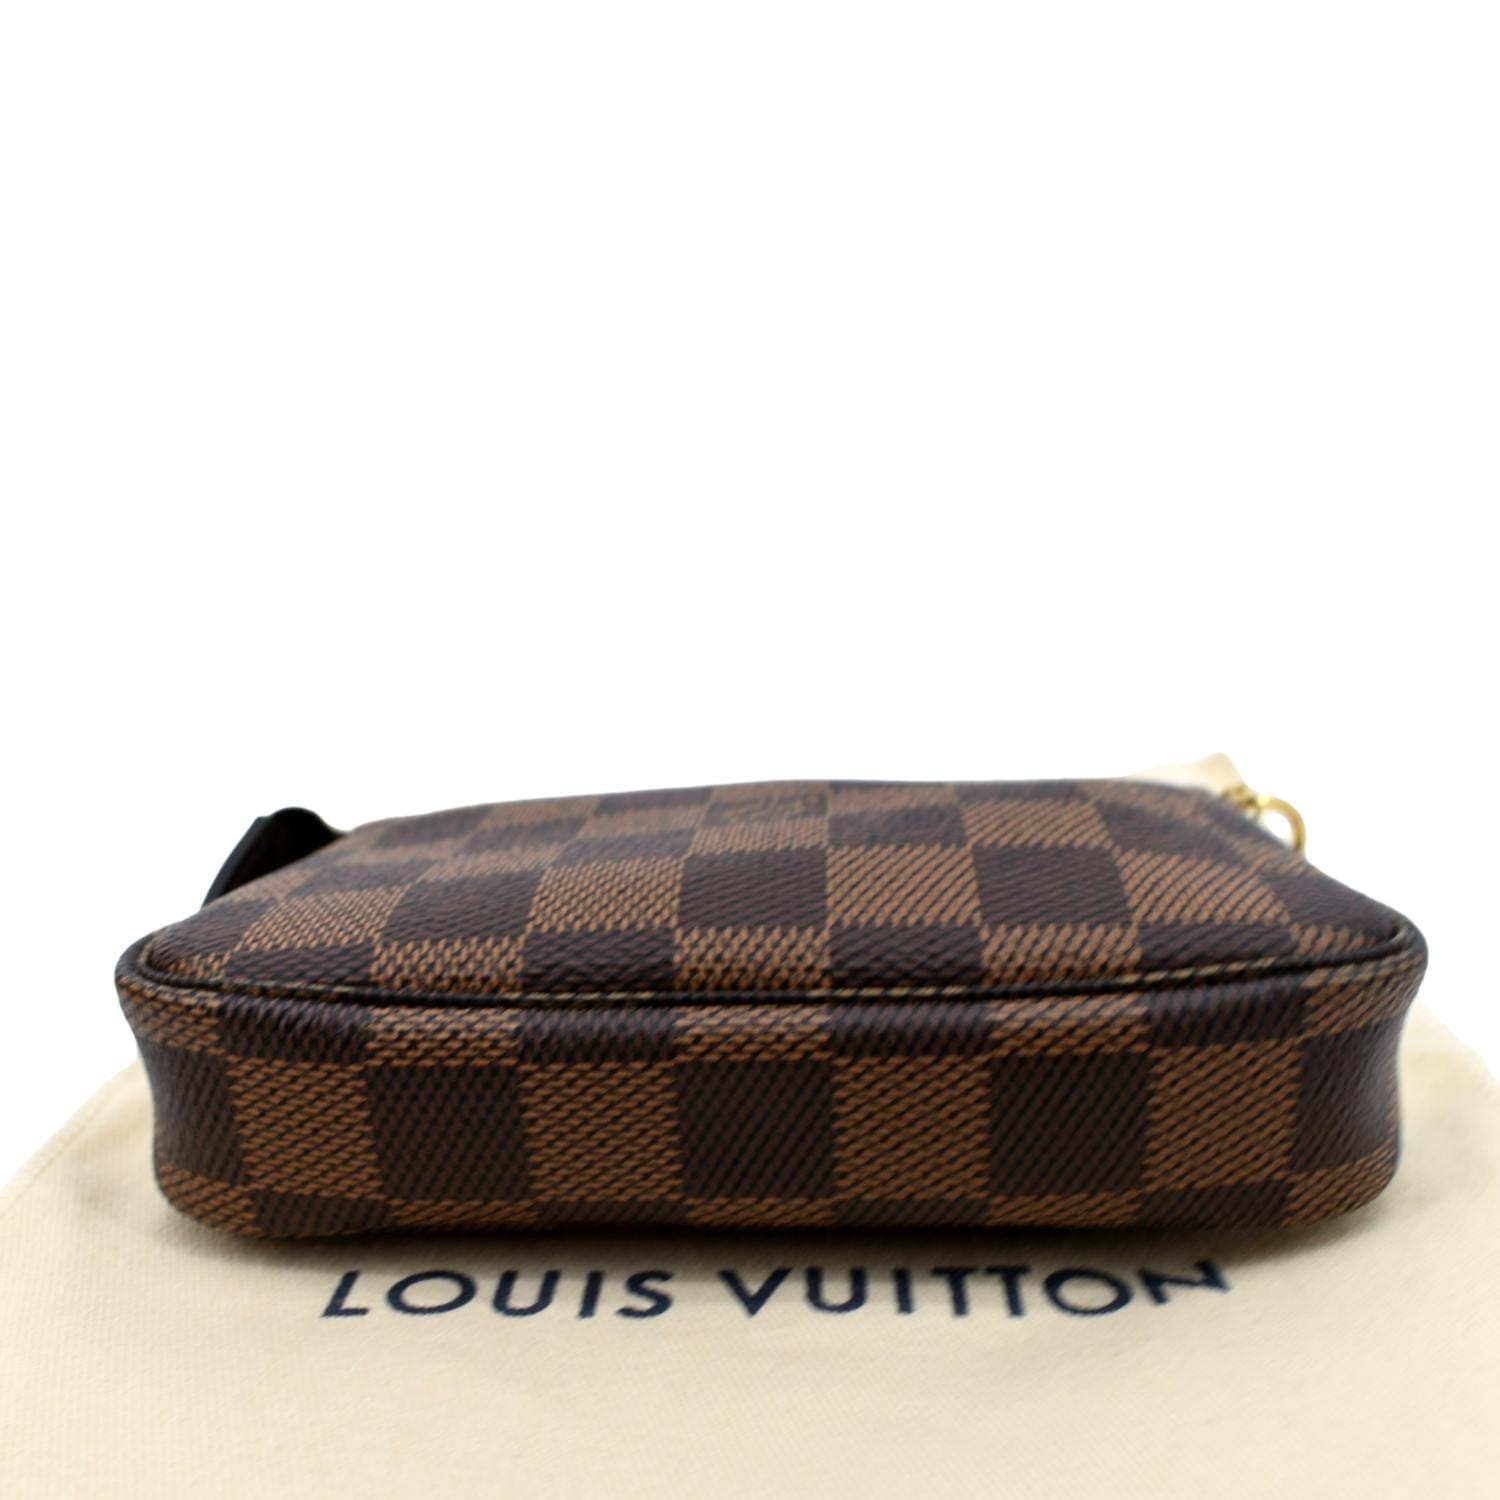 Louis Vuitton Mini Pochette Damier Ebene, New in Box